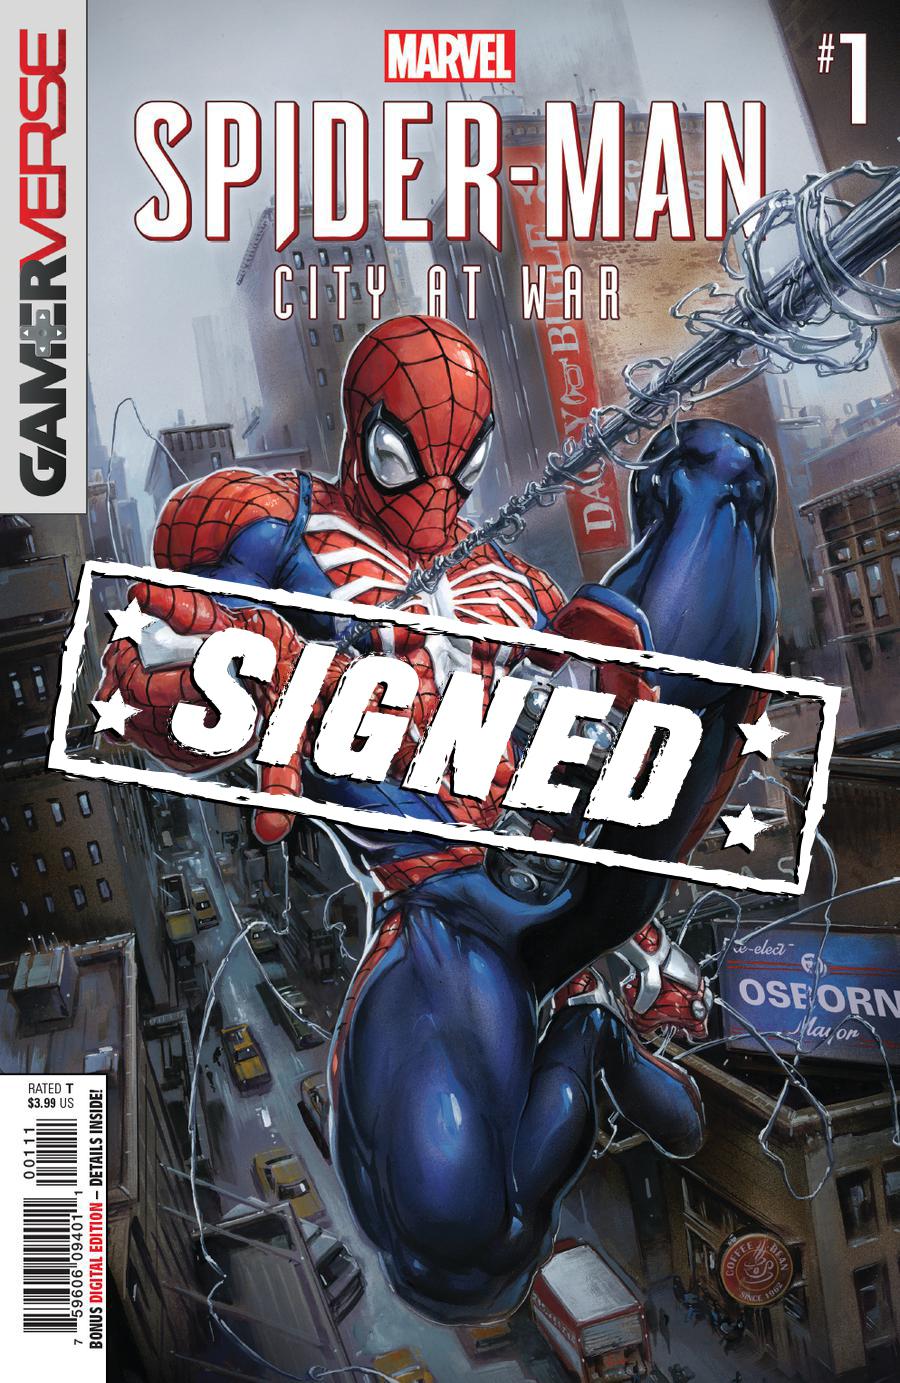 Marvels Spider-Man City At War #1 Cover G Regular Clayton Crain Cover Signed By Dennis Hopeless Hallum